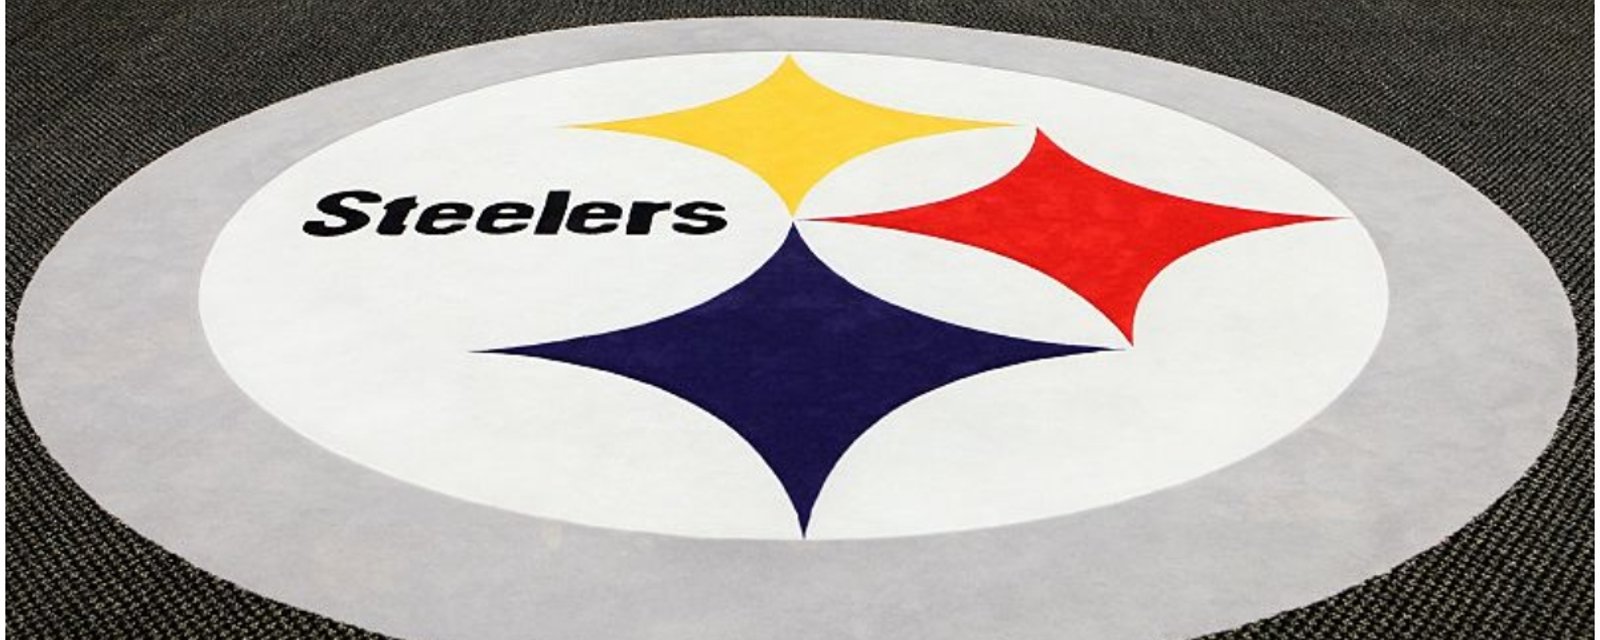 Steelers announce key change to locker room